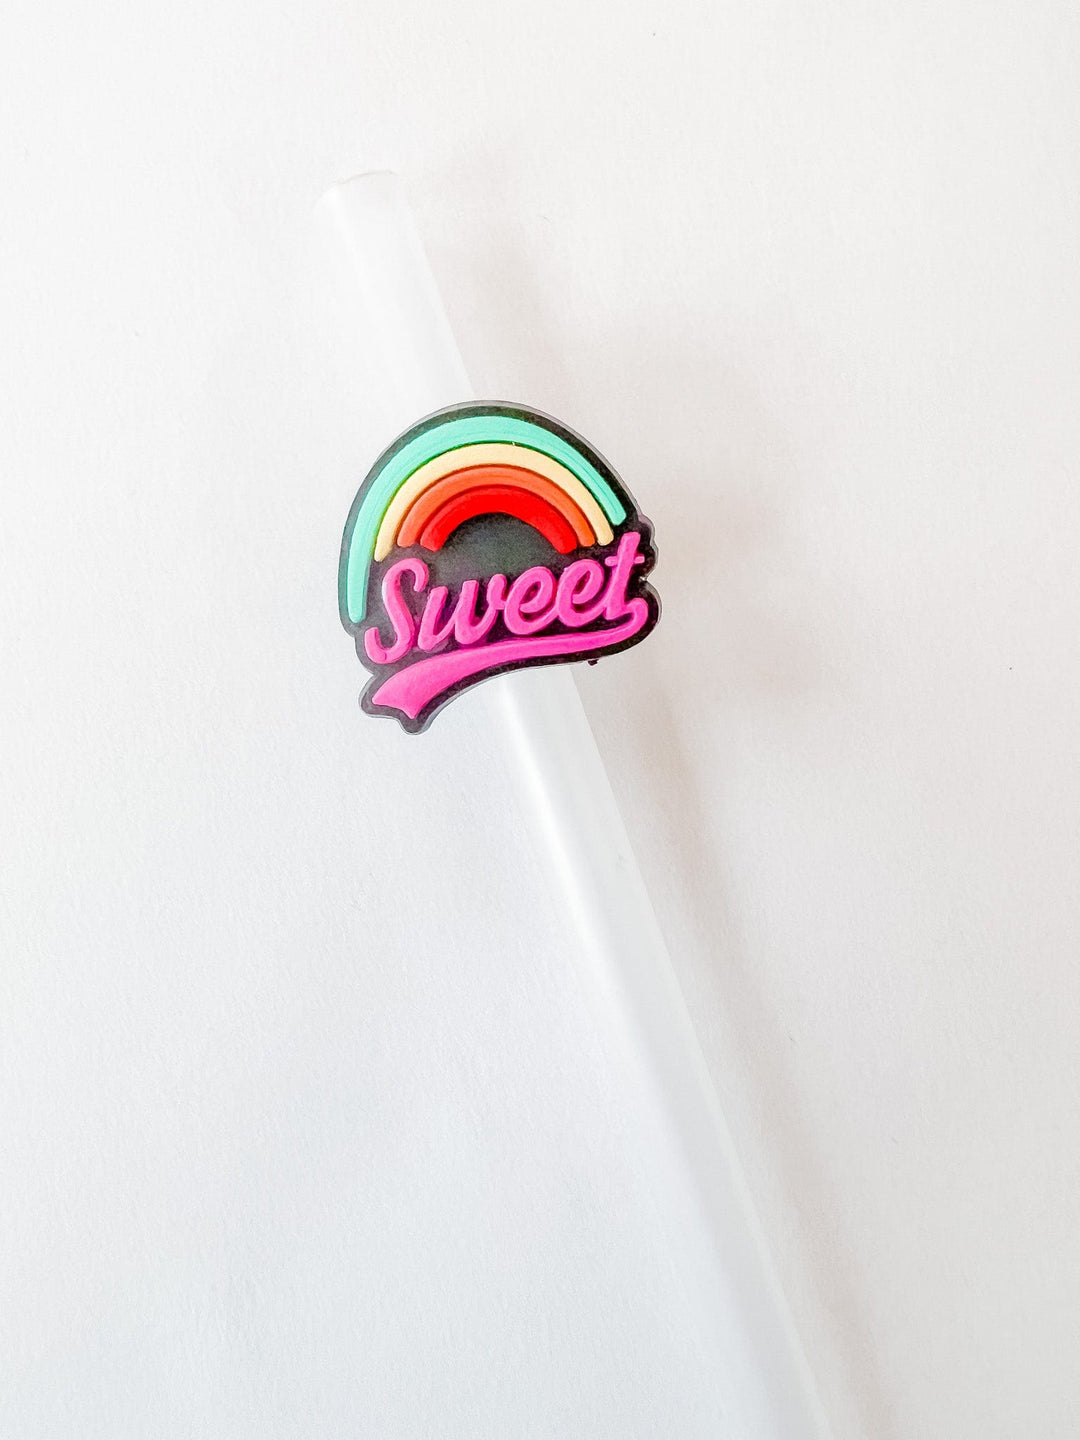 Sweet rainbow straw accessory